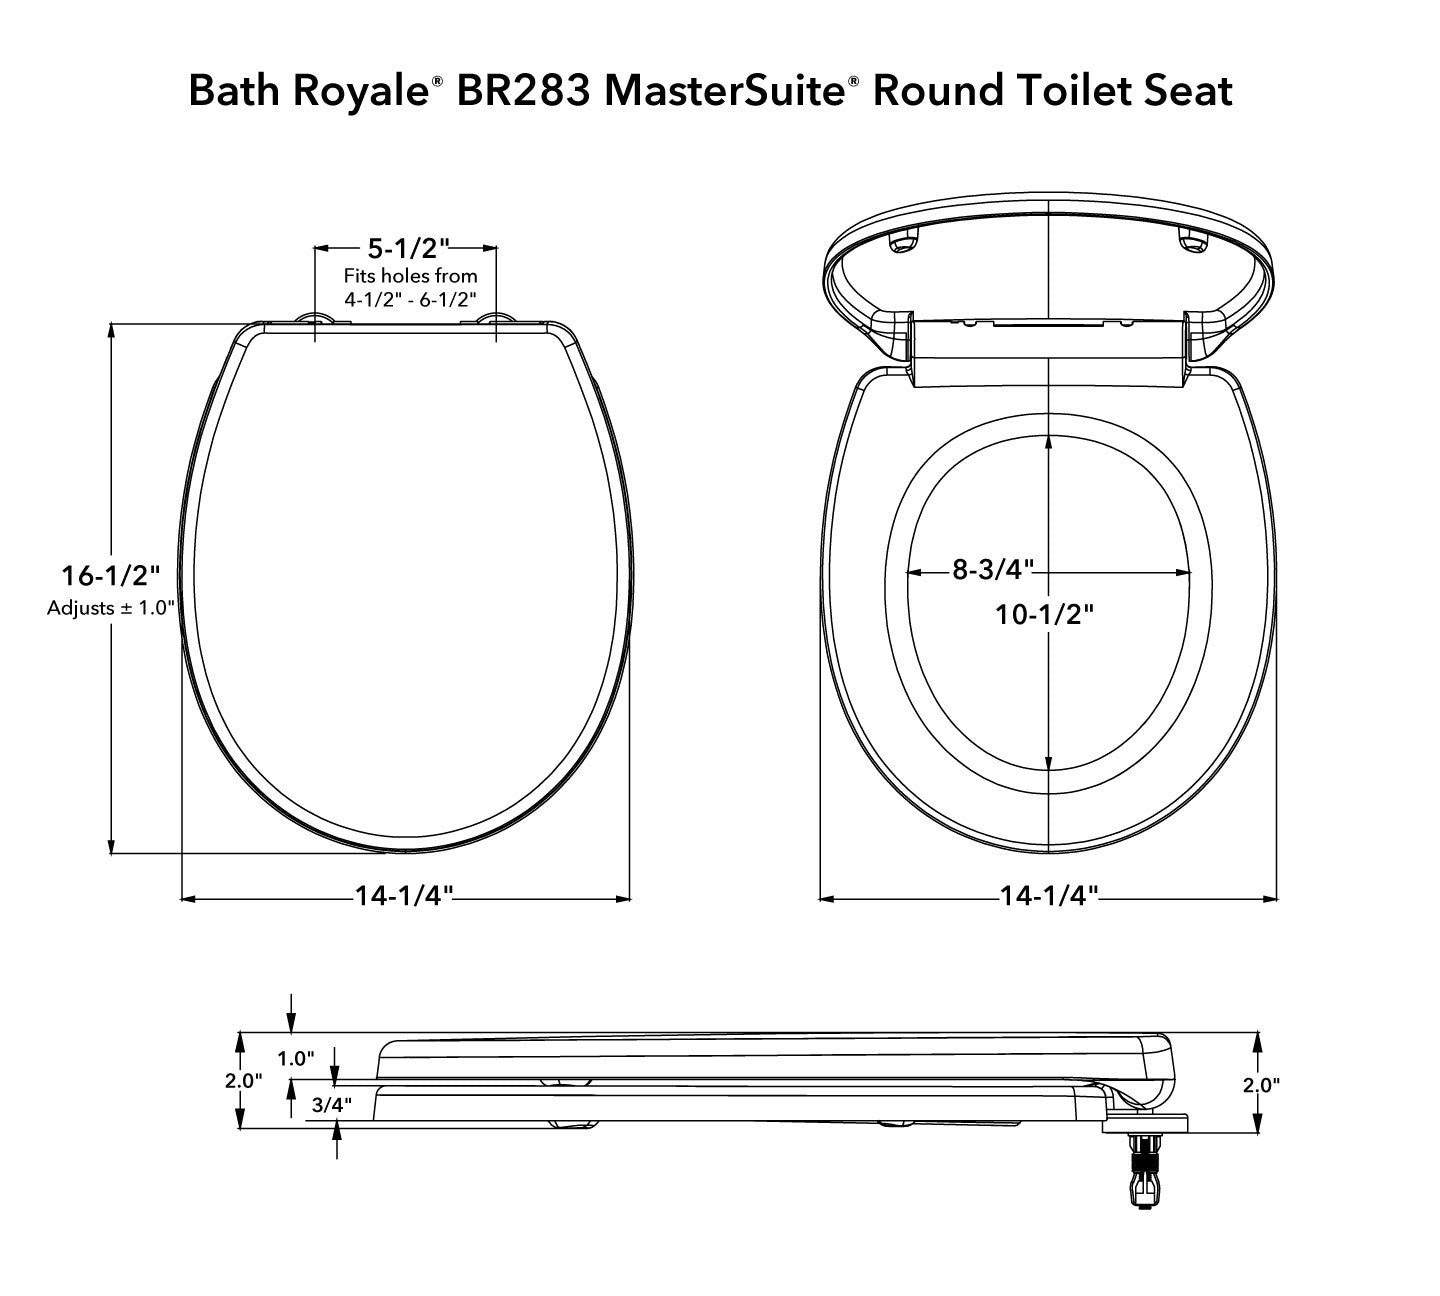 BR283-MasterSuite Round Toilet Seat Dimensions